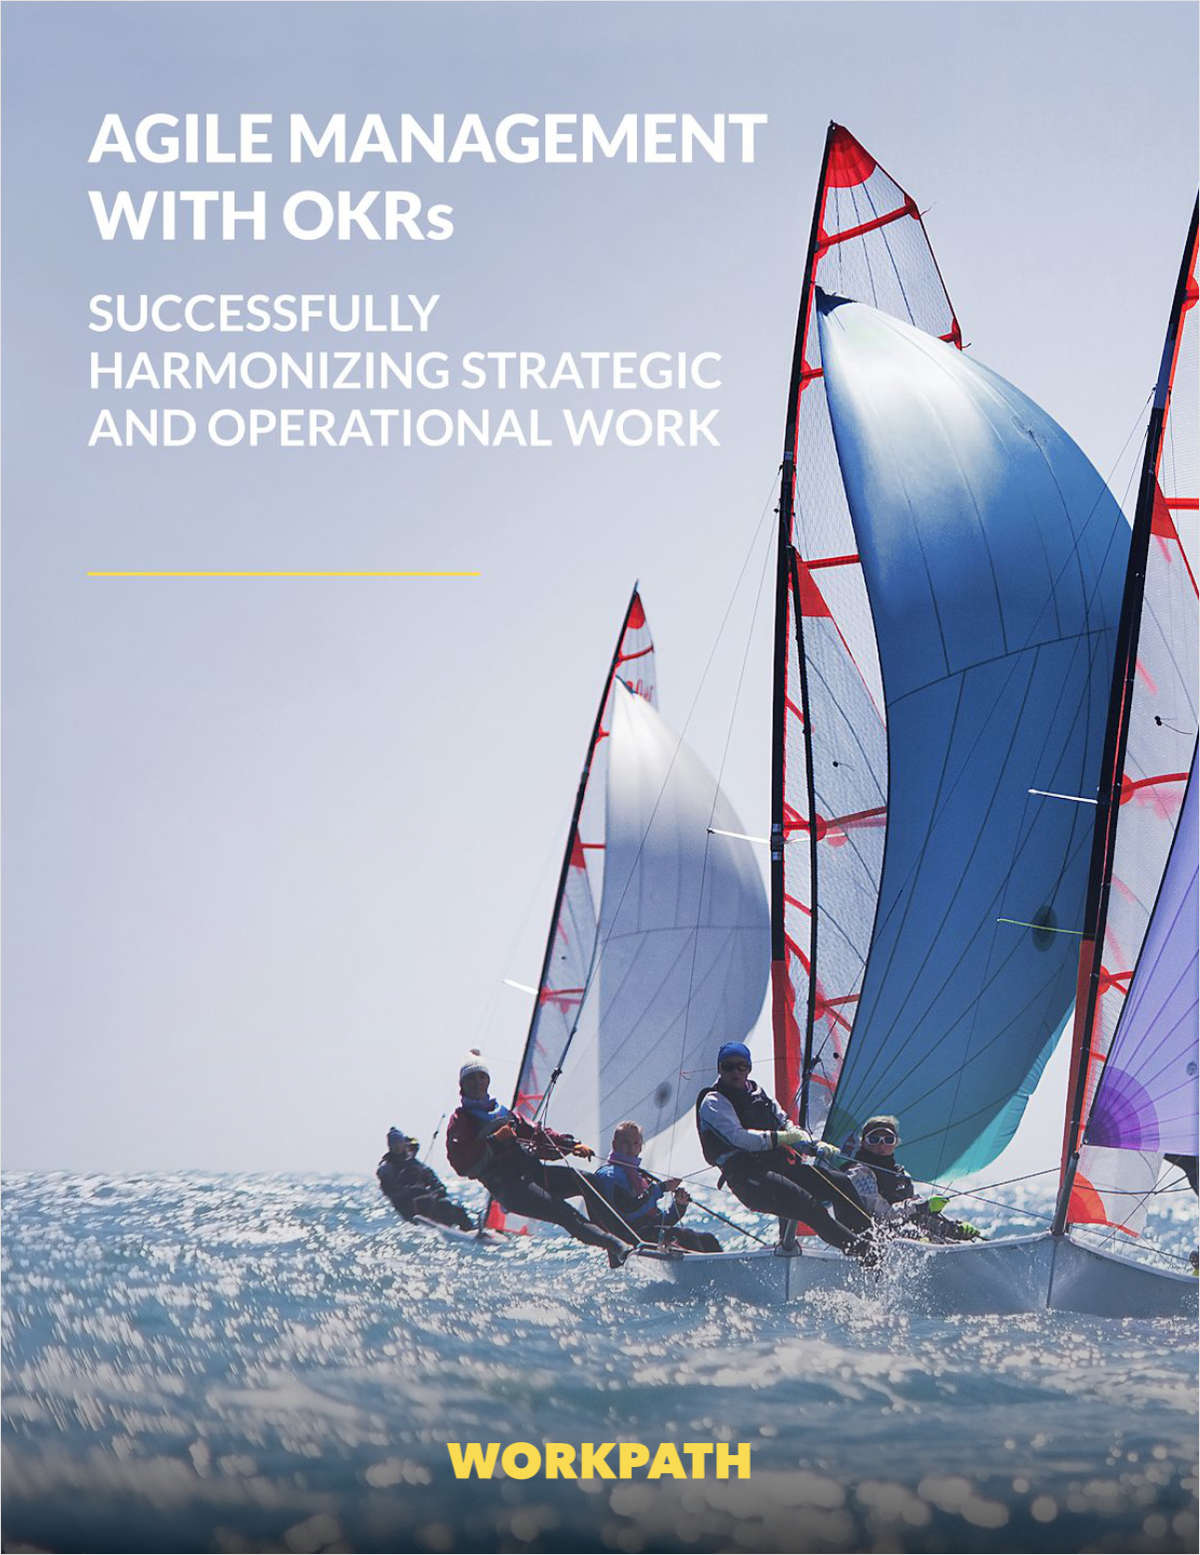 Agile Management - Successfully harmonizing strategic and operational work with OKR